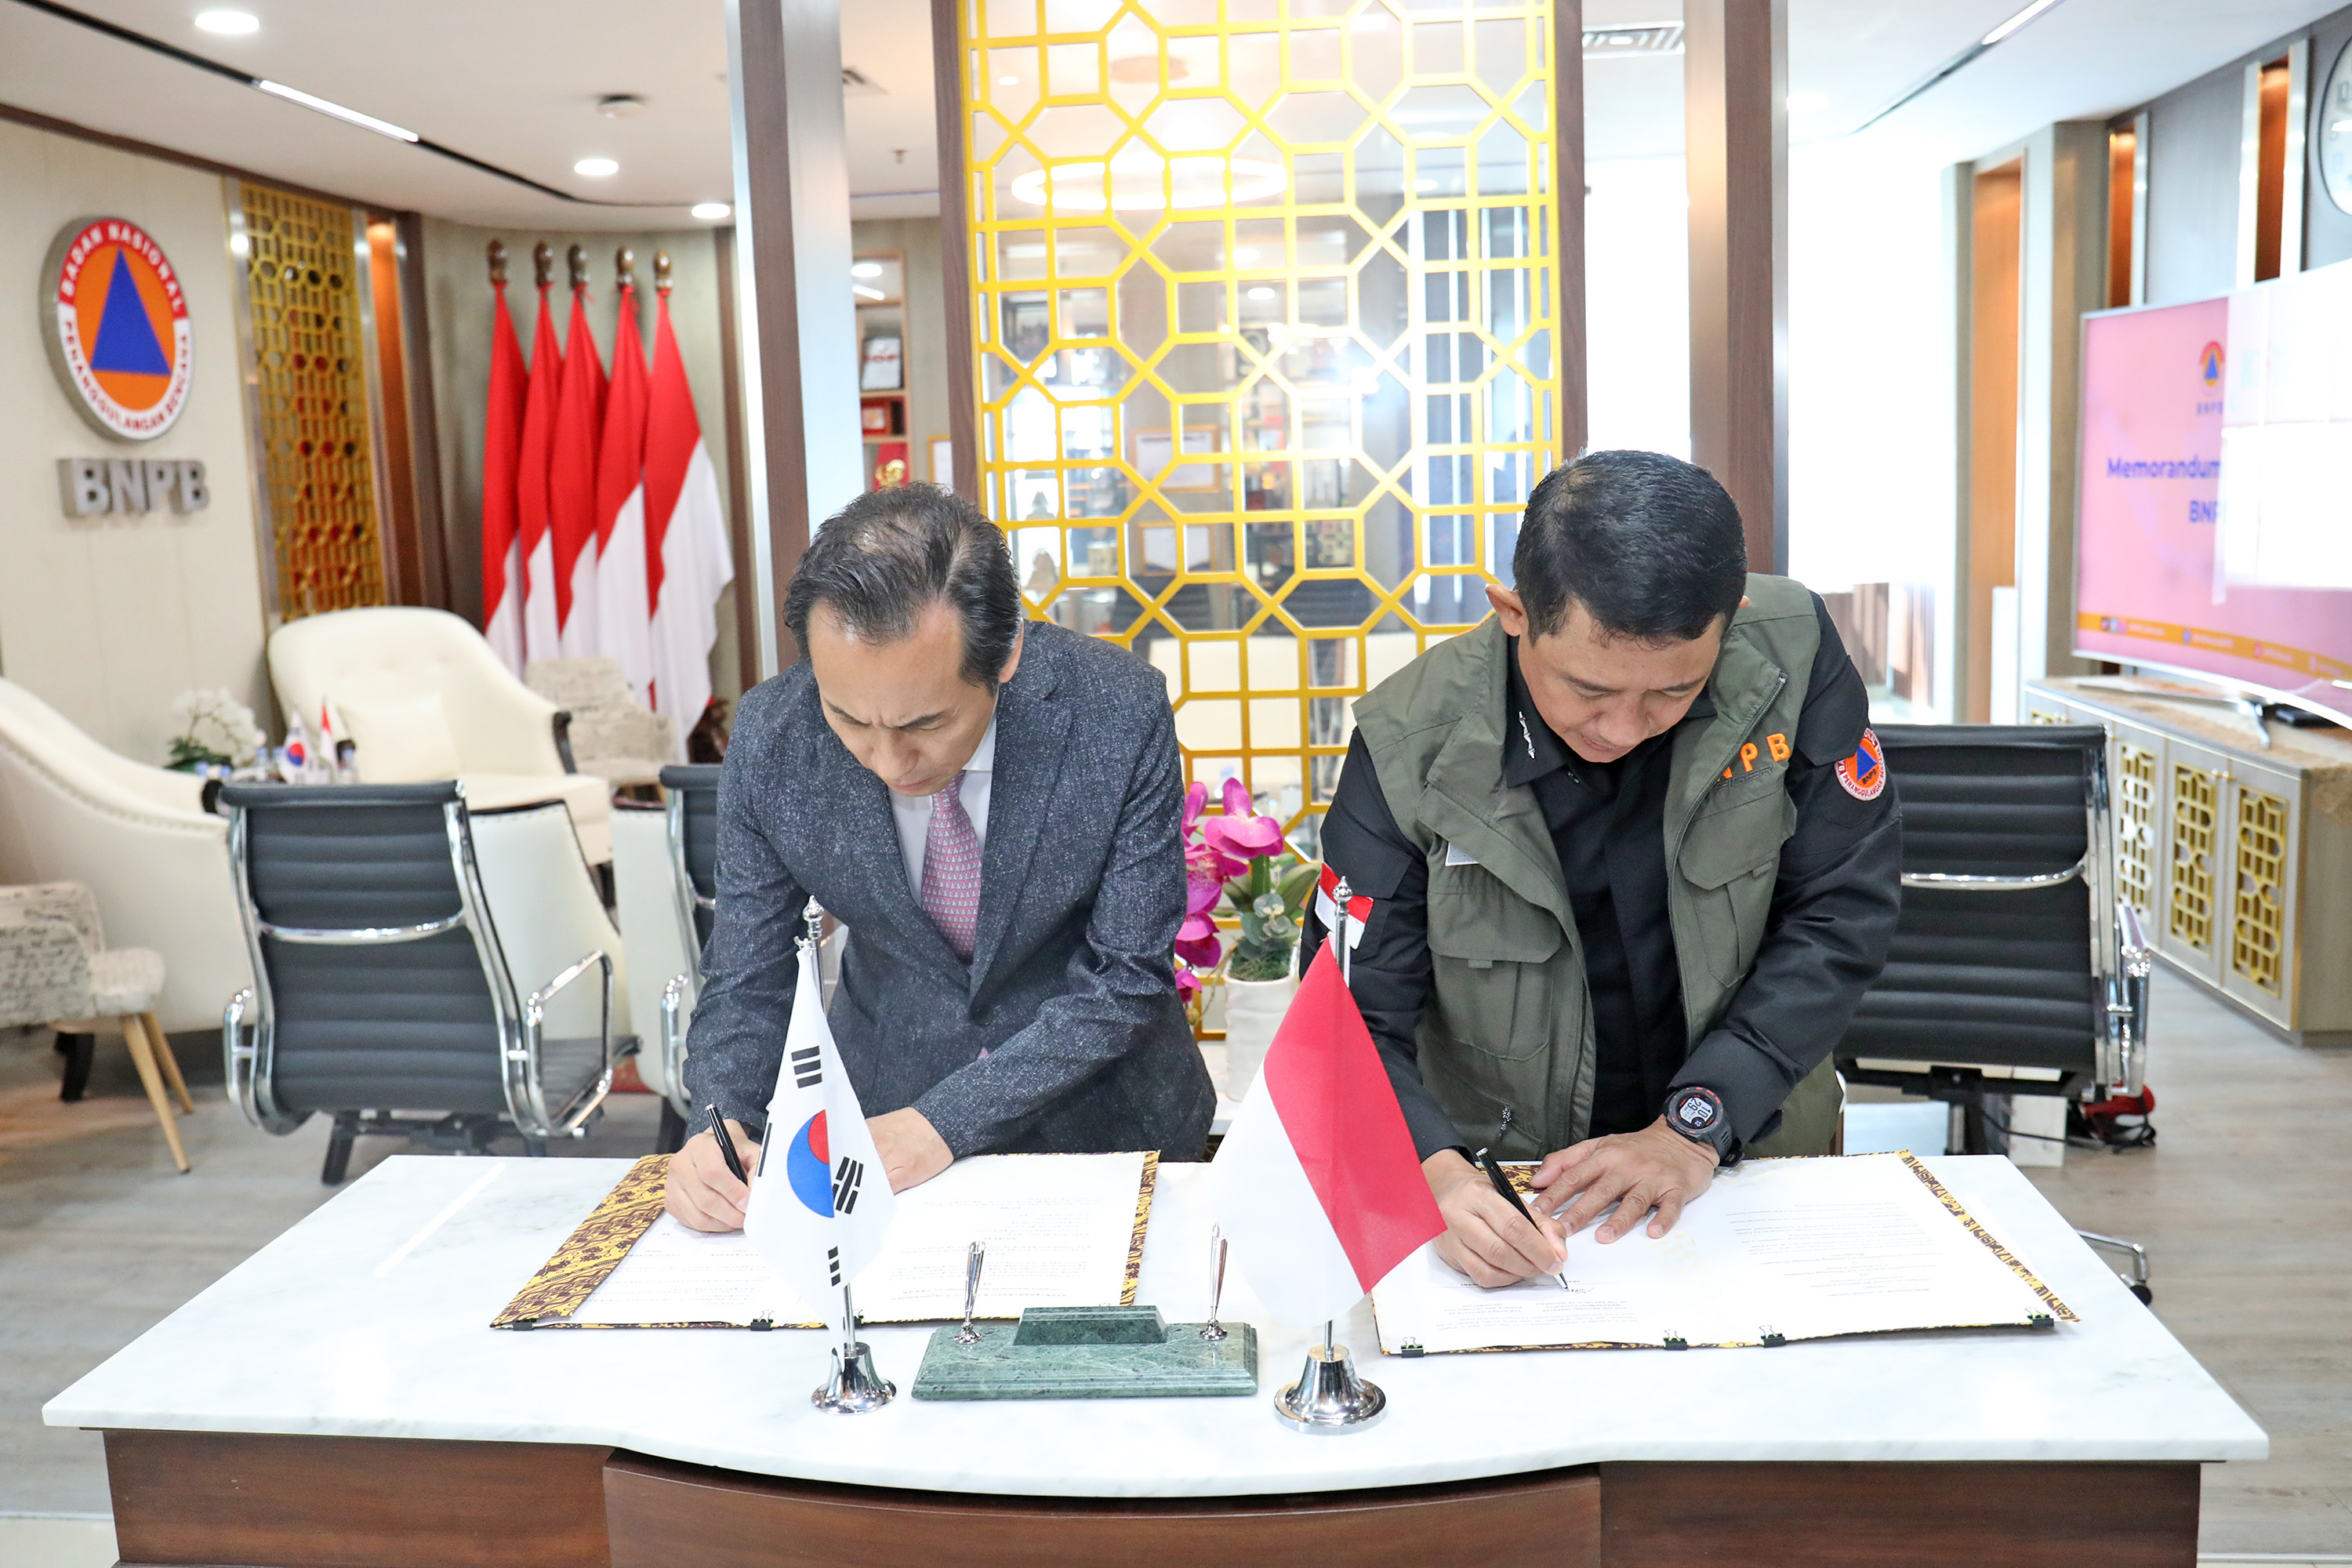 Kepala BNPB Letjen TNI Suharyanto S,Sos., M.M., (kanan) dan Presiden KISTI Kim Jaesoo menandatangani nota kesepahaman kerja sama di Graha BNPB, Jakarta, Rabu (31/5).